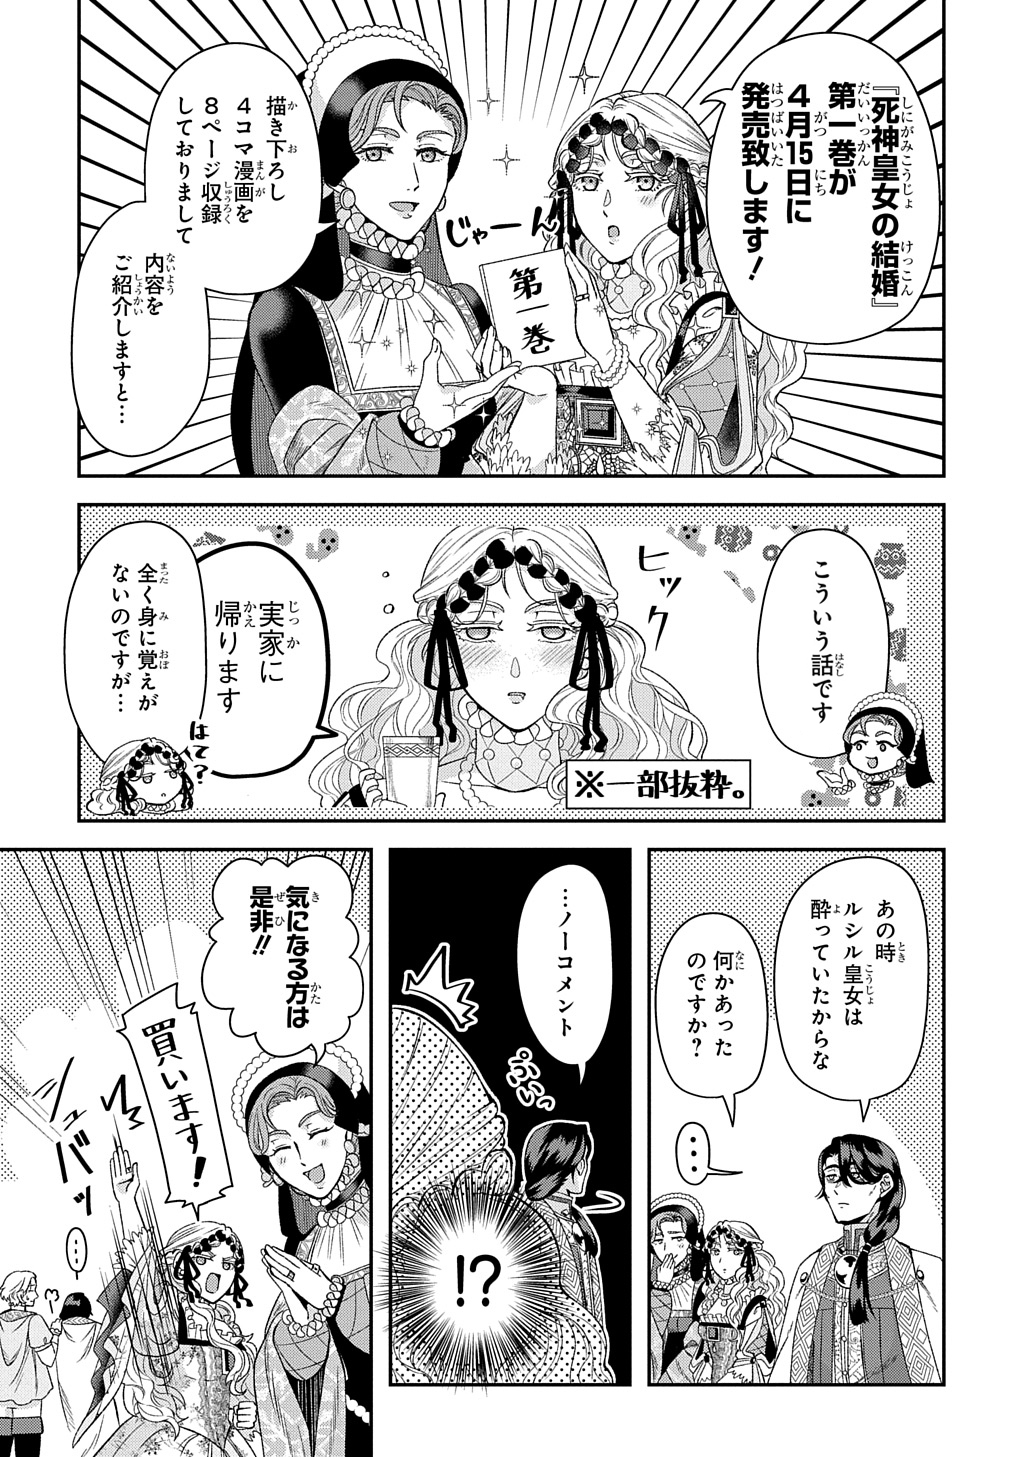 Shinigami Oujo no Kekkon - Chapter 5.5 - Page 1